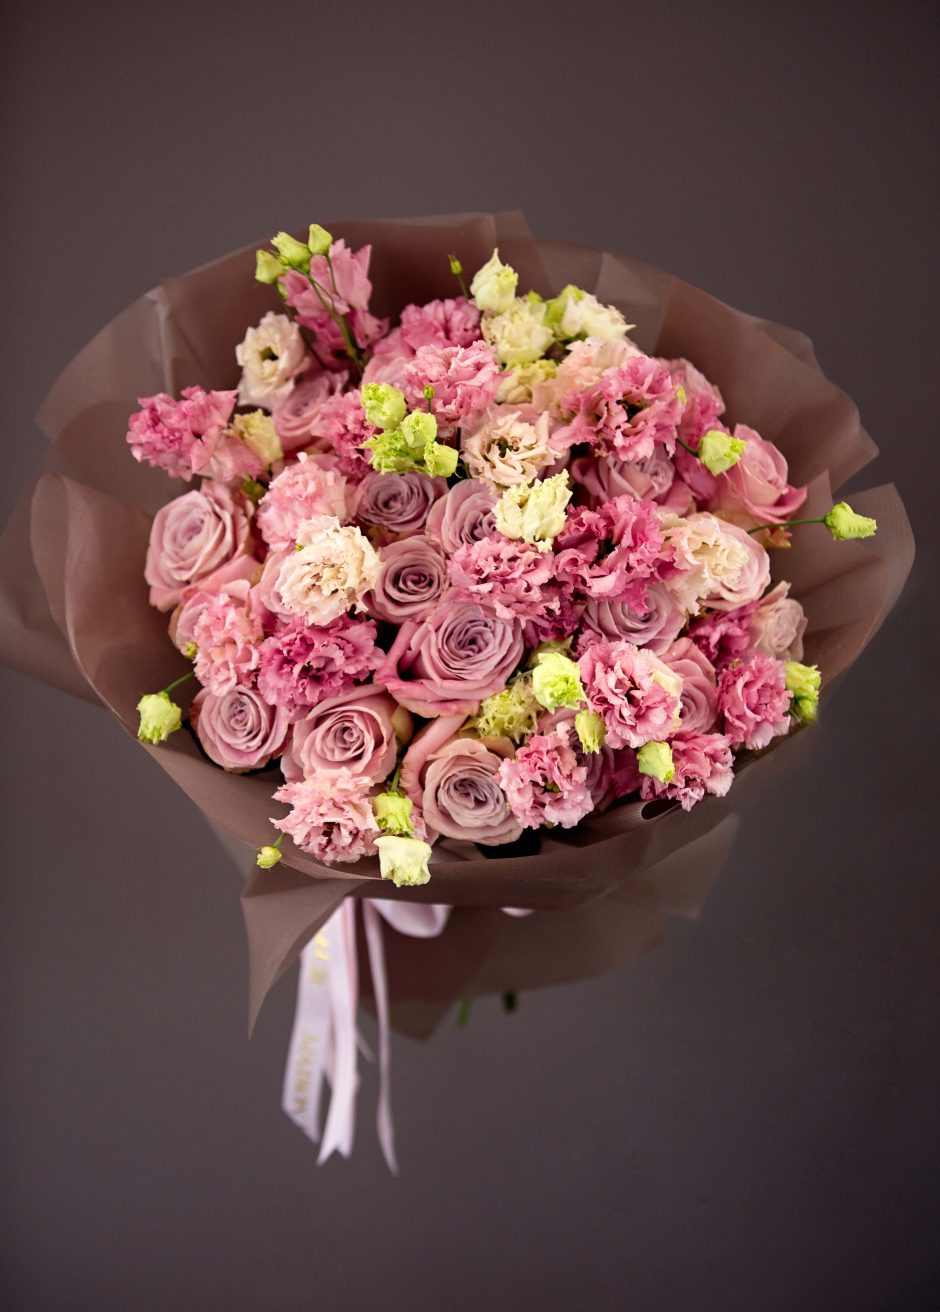 Pink Faith Rose and Fluffy Lisianthus , Sugar Rose - pink faith rose and European fluffy lisianthus